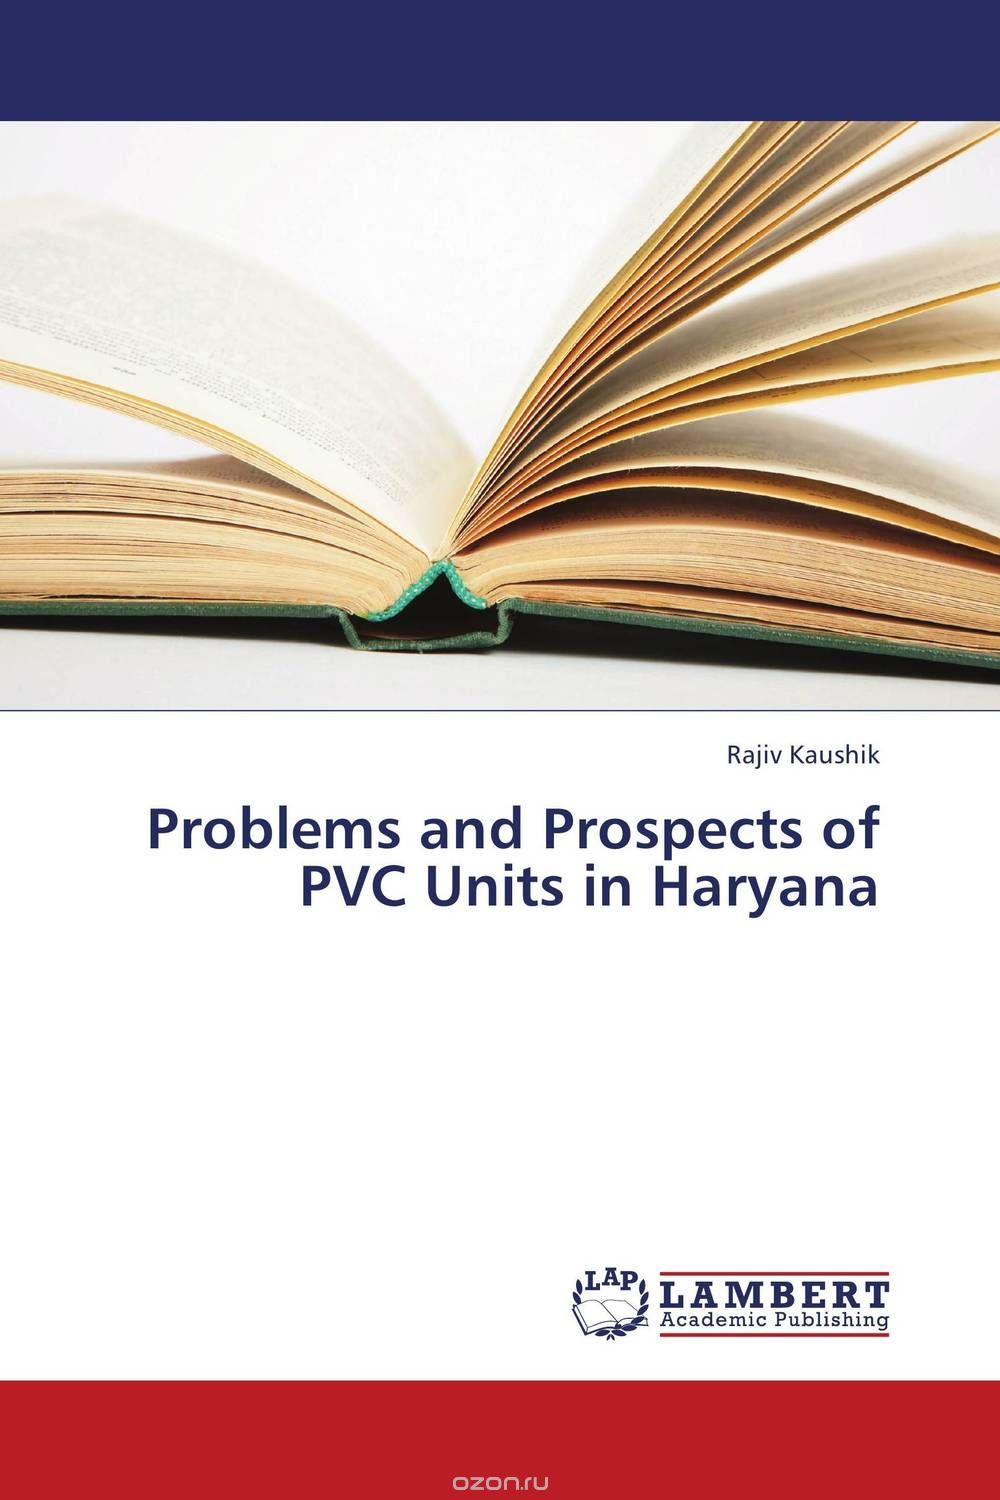 Скачать книгу "Problems and Prospects of PVC Units in Haryana"